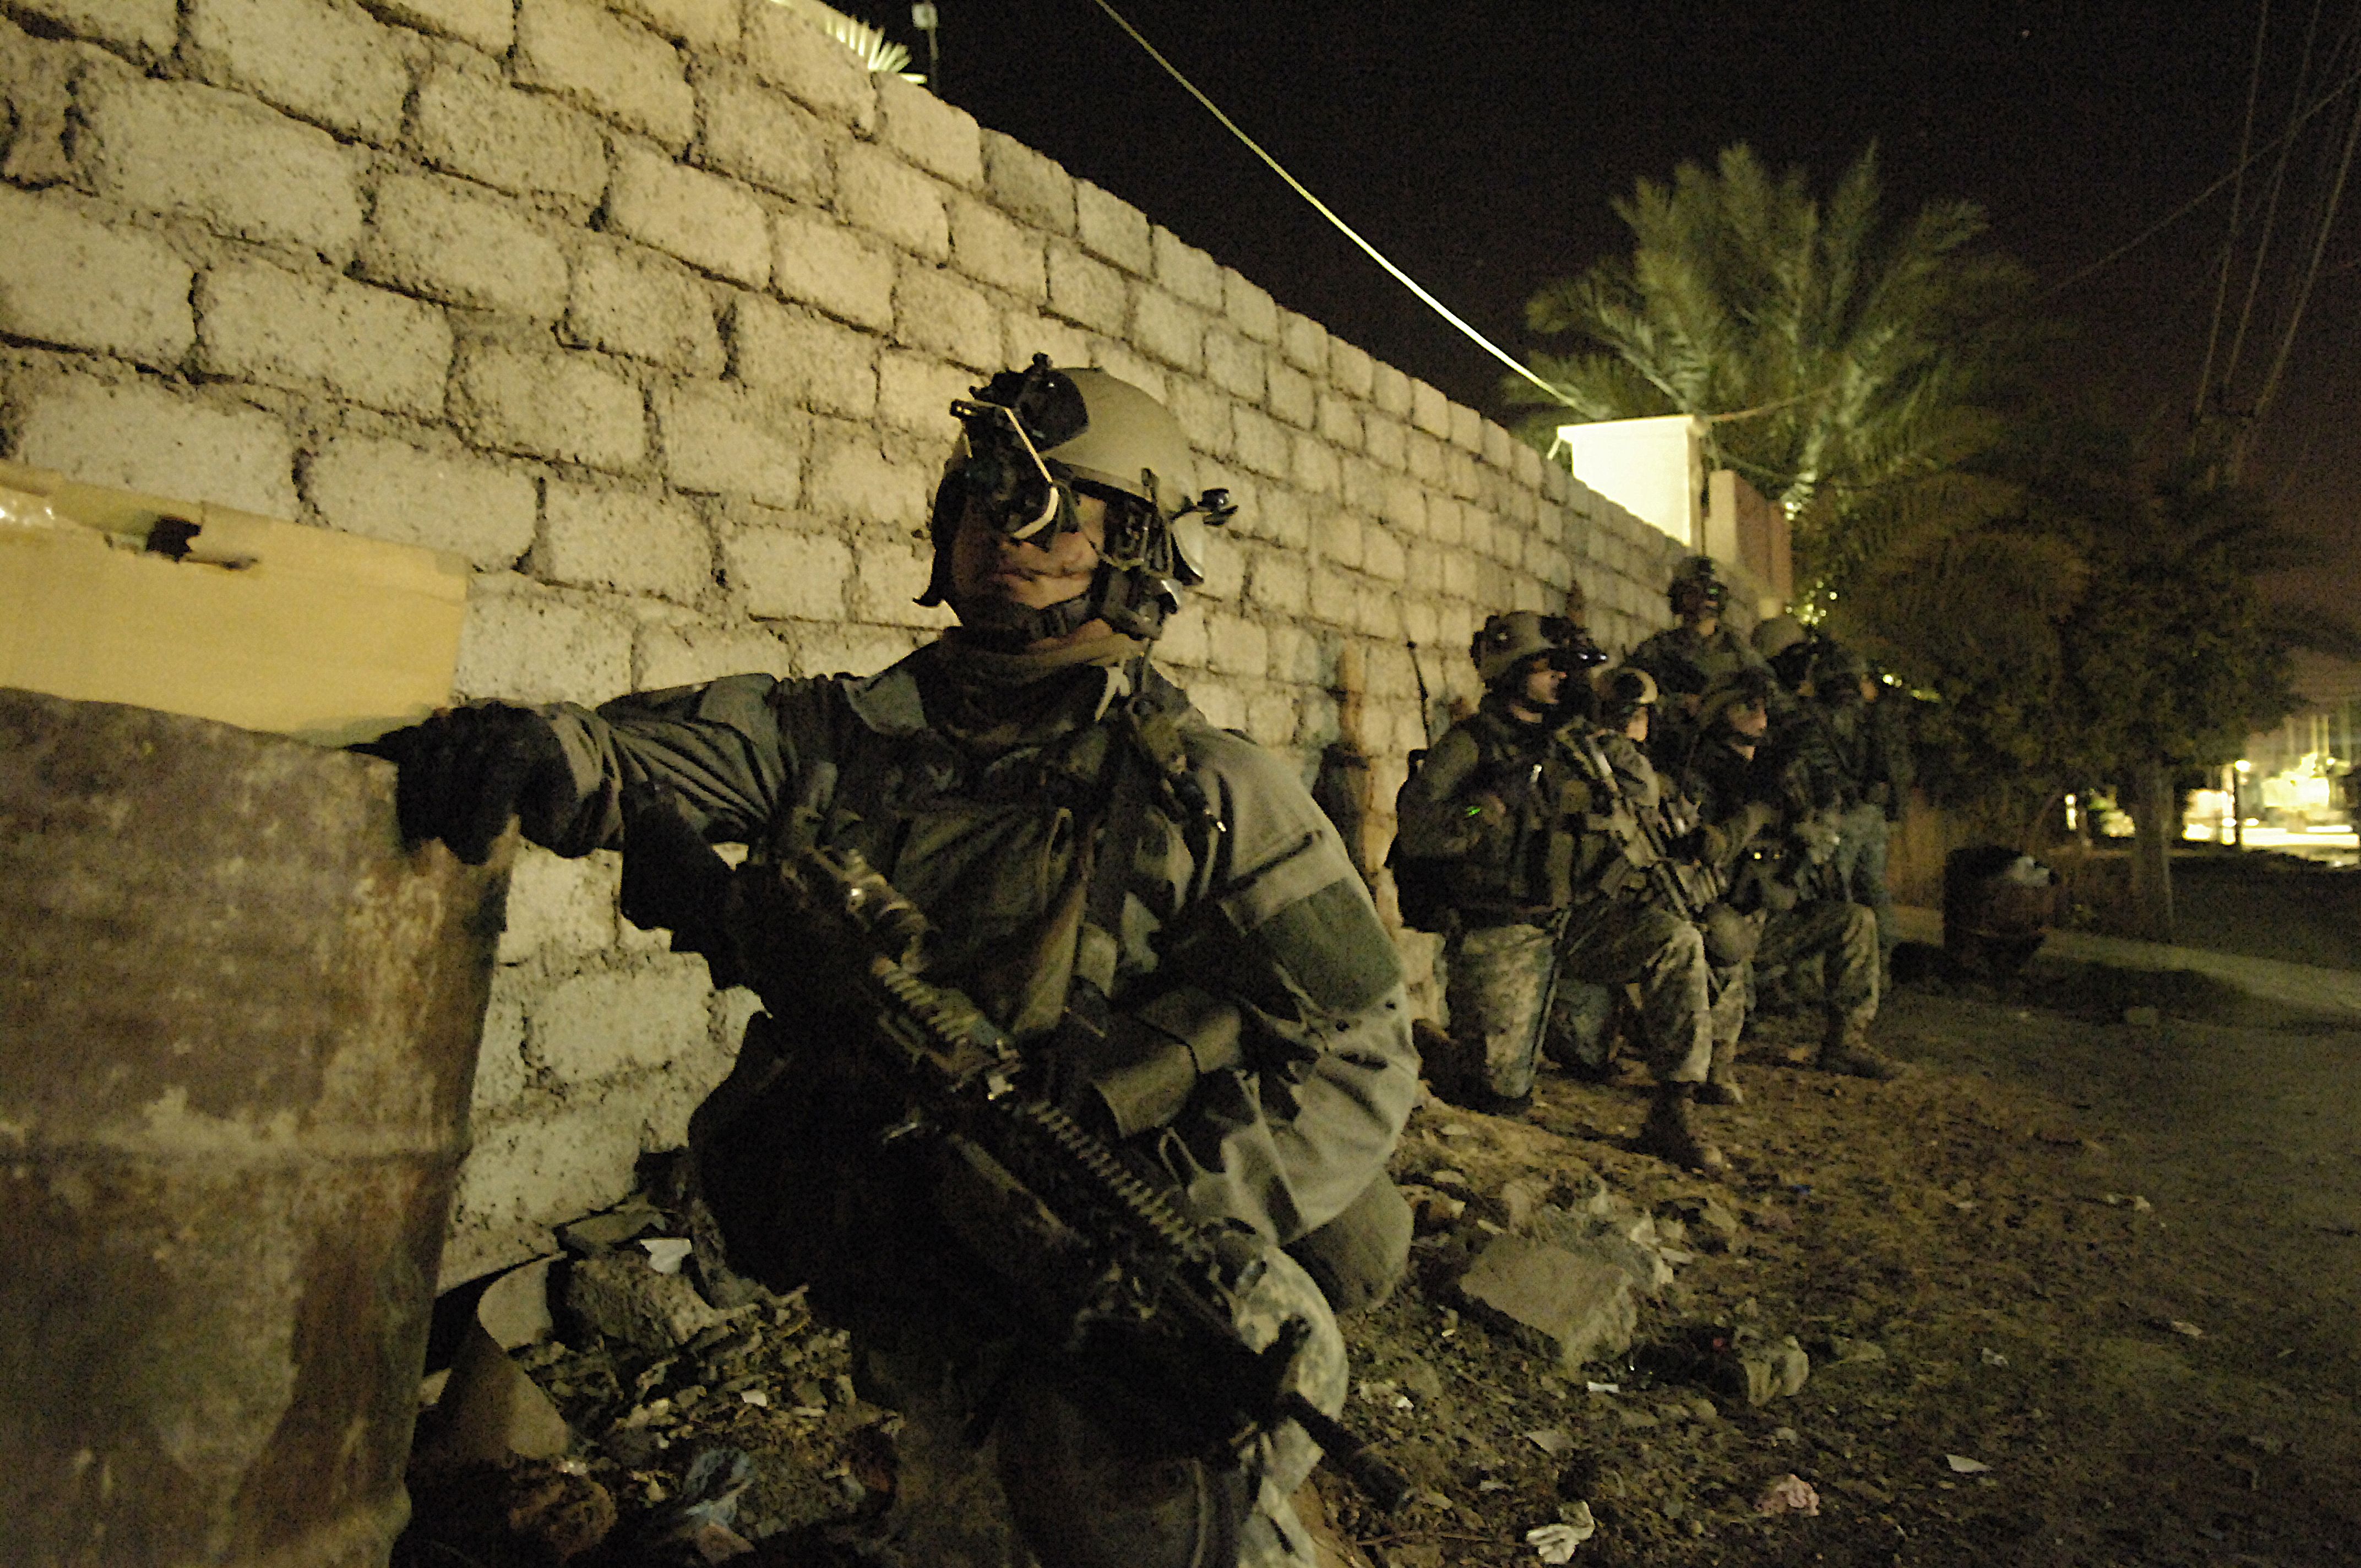 75th Ranger Regiment conducing operations in Iraq, 26 April